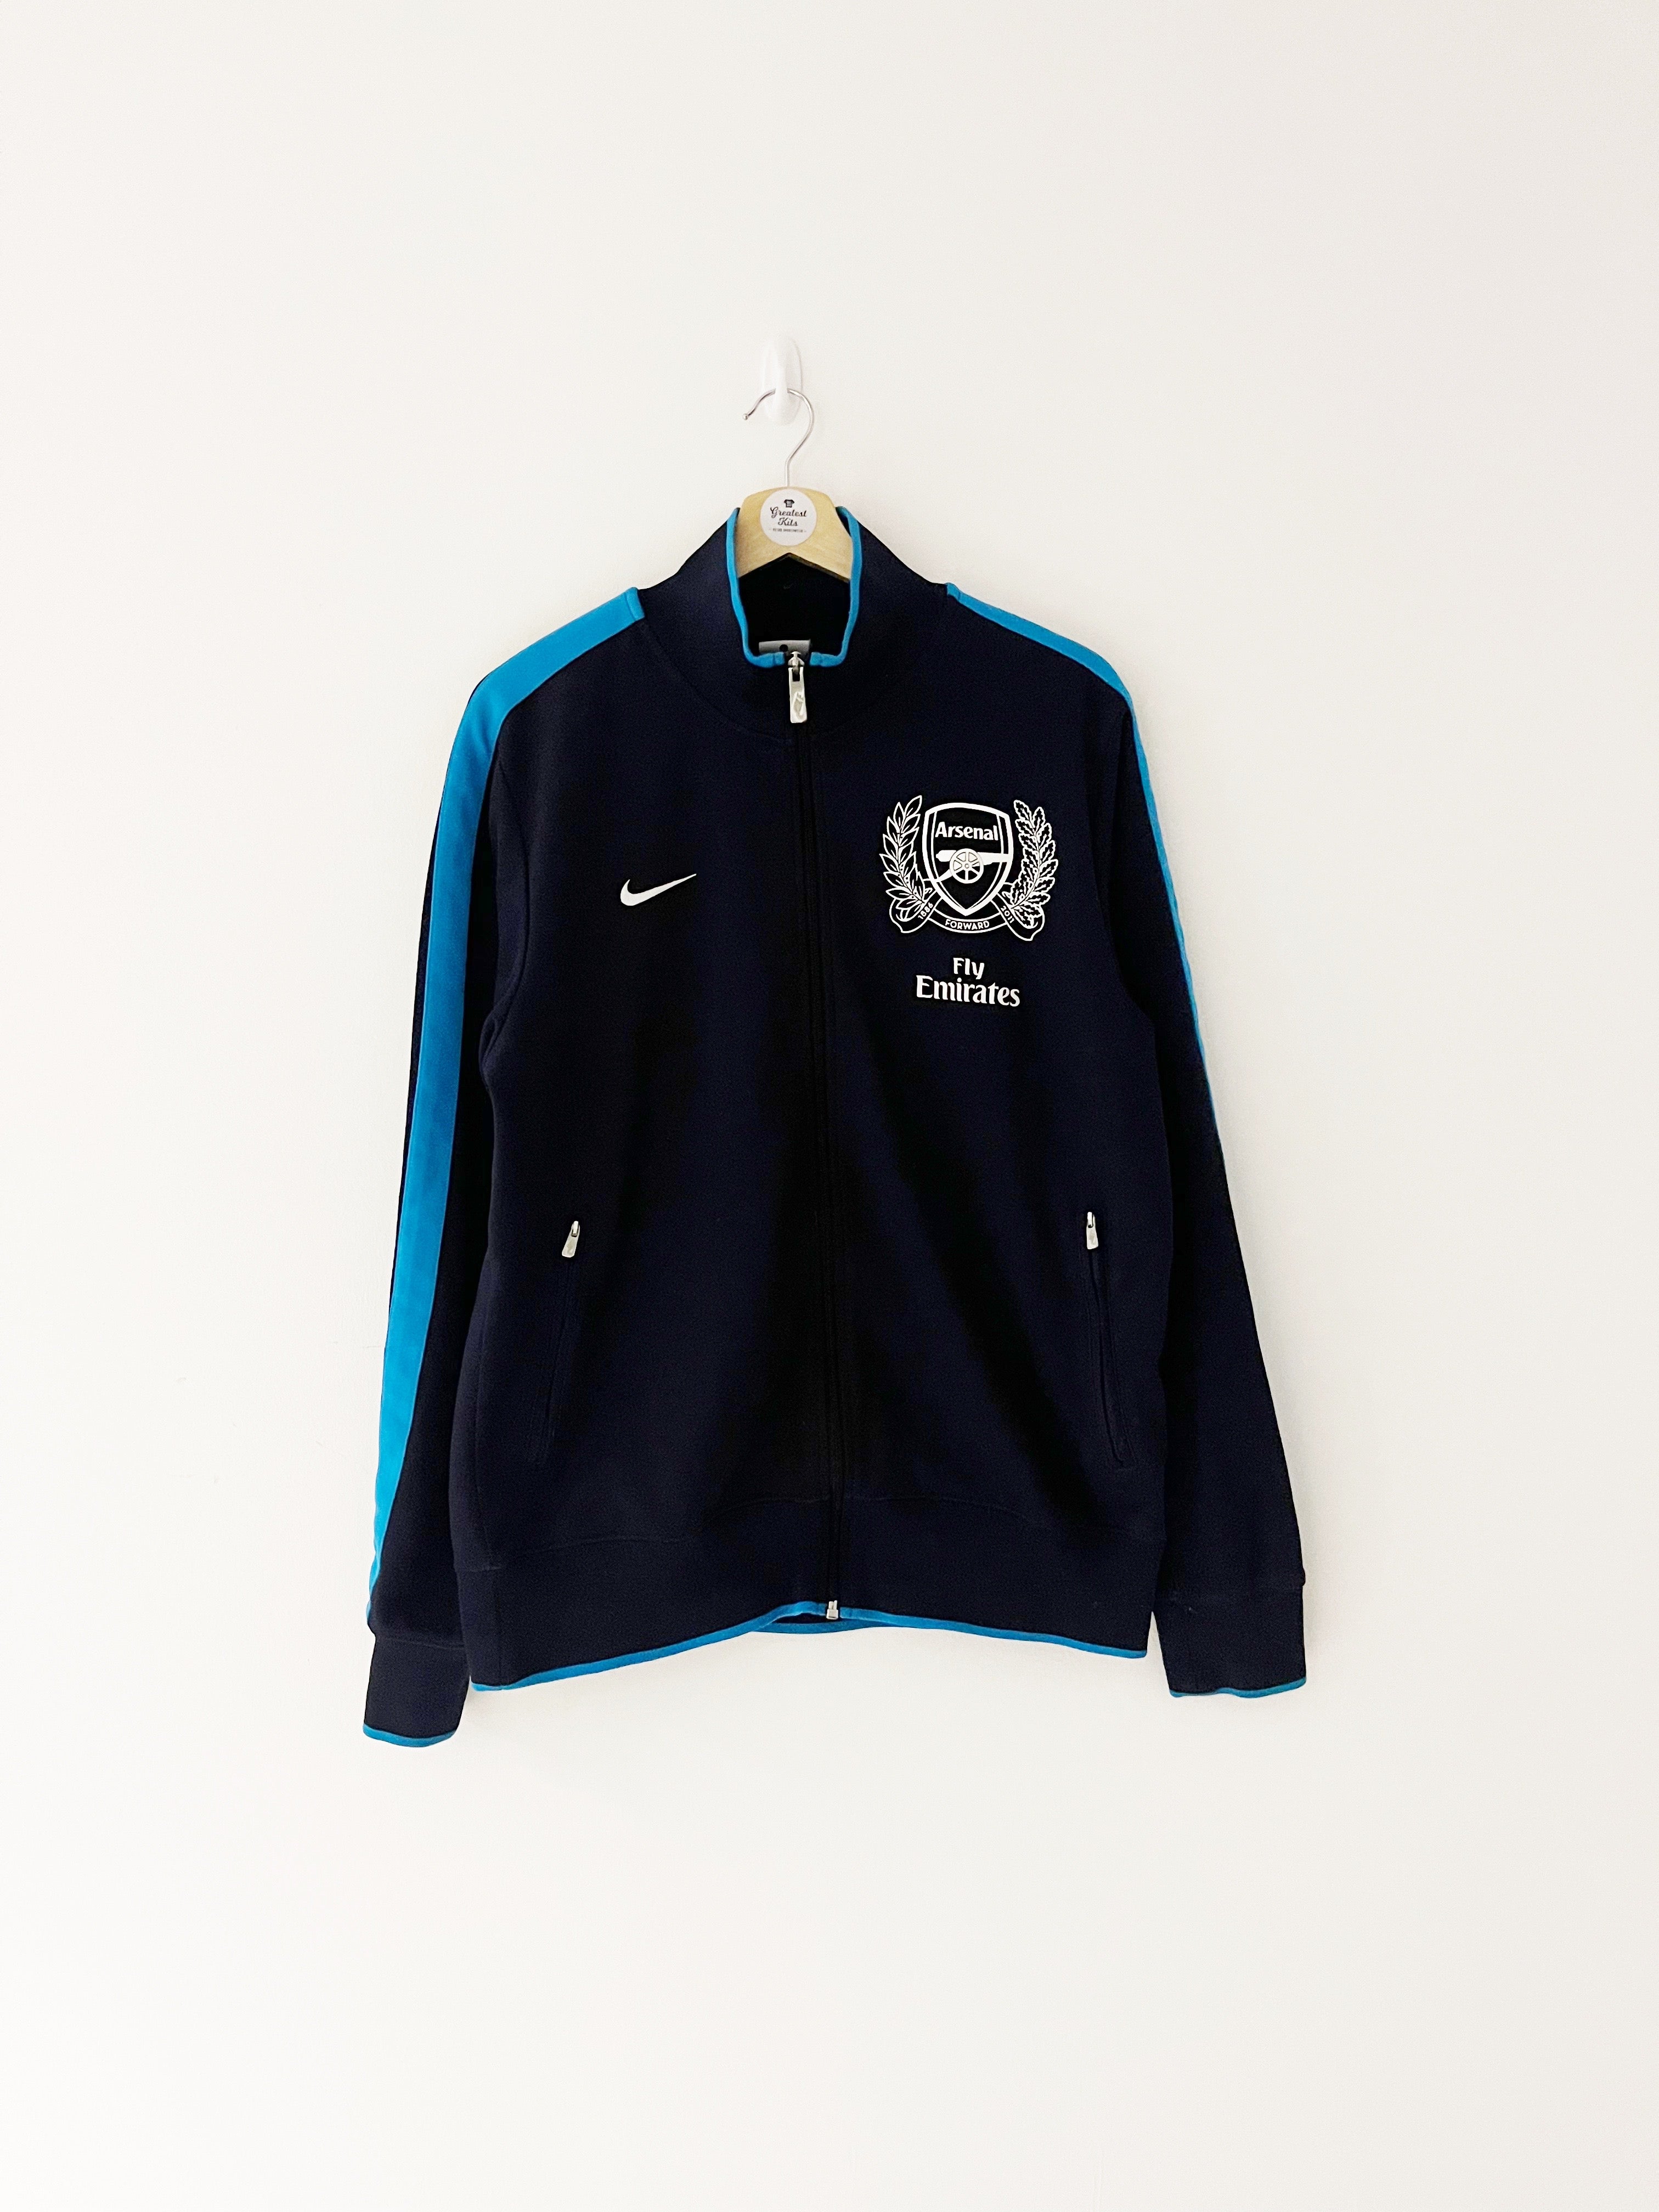 2011/12 Arsenal ‘125th Anniversary’ Training Jacket (L) 9/10